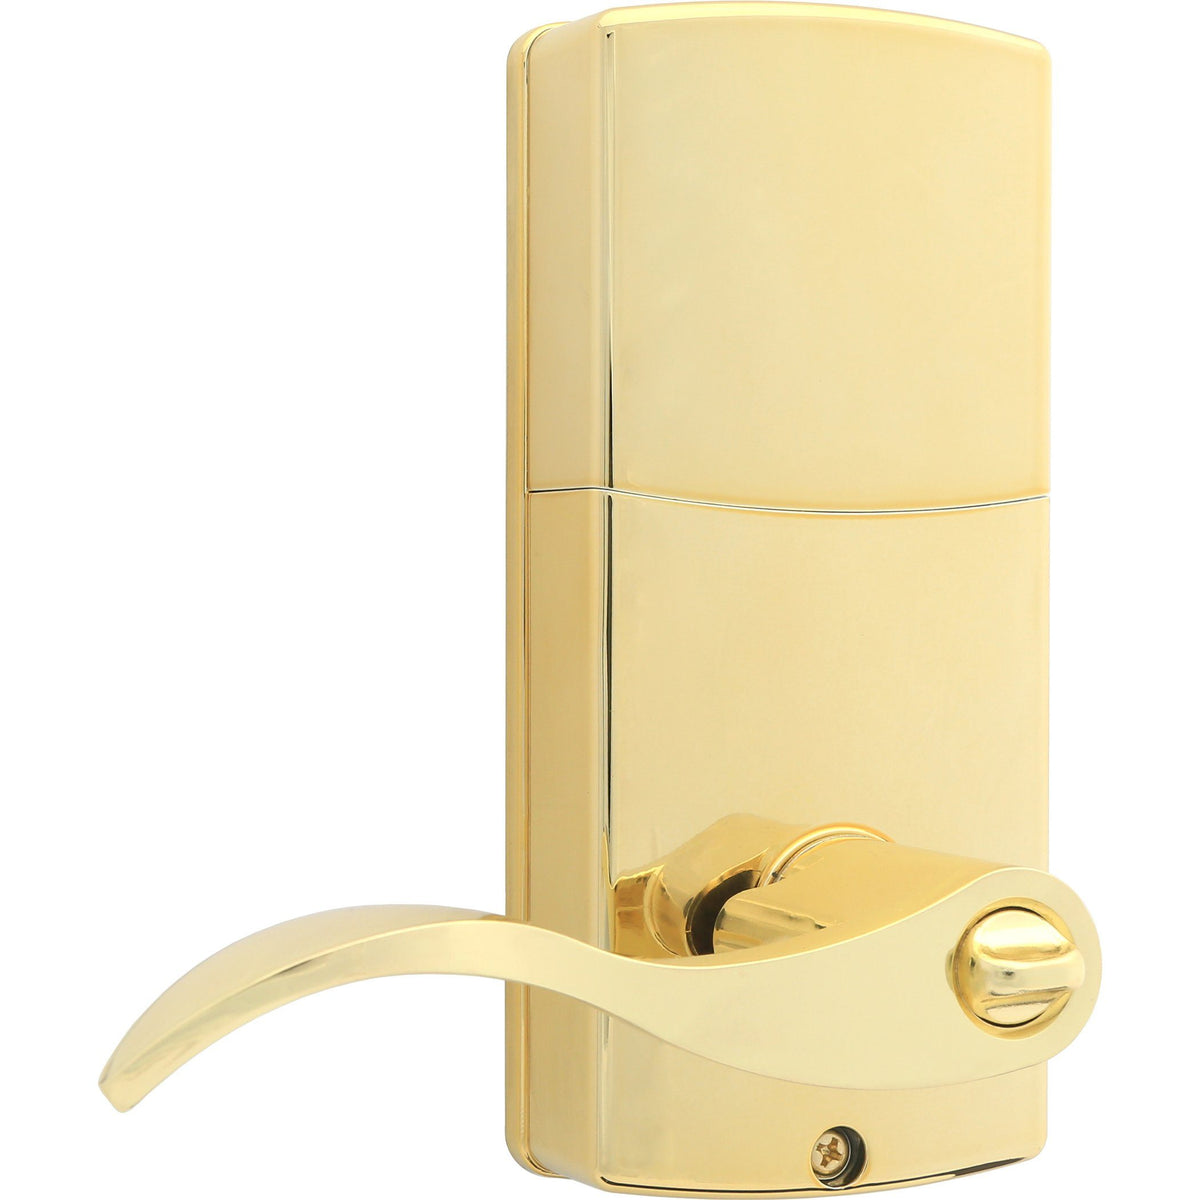 Honeywell 8734001 Electronic Entry Lever Door Lock with Keypad Polished Brass Finish Backside